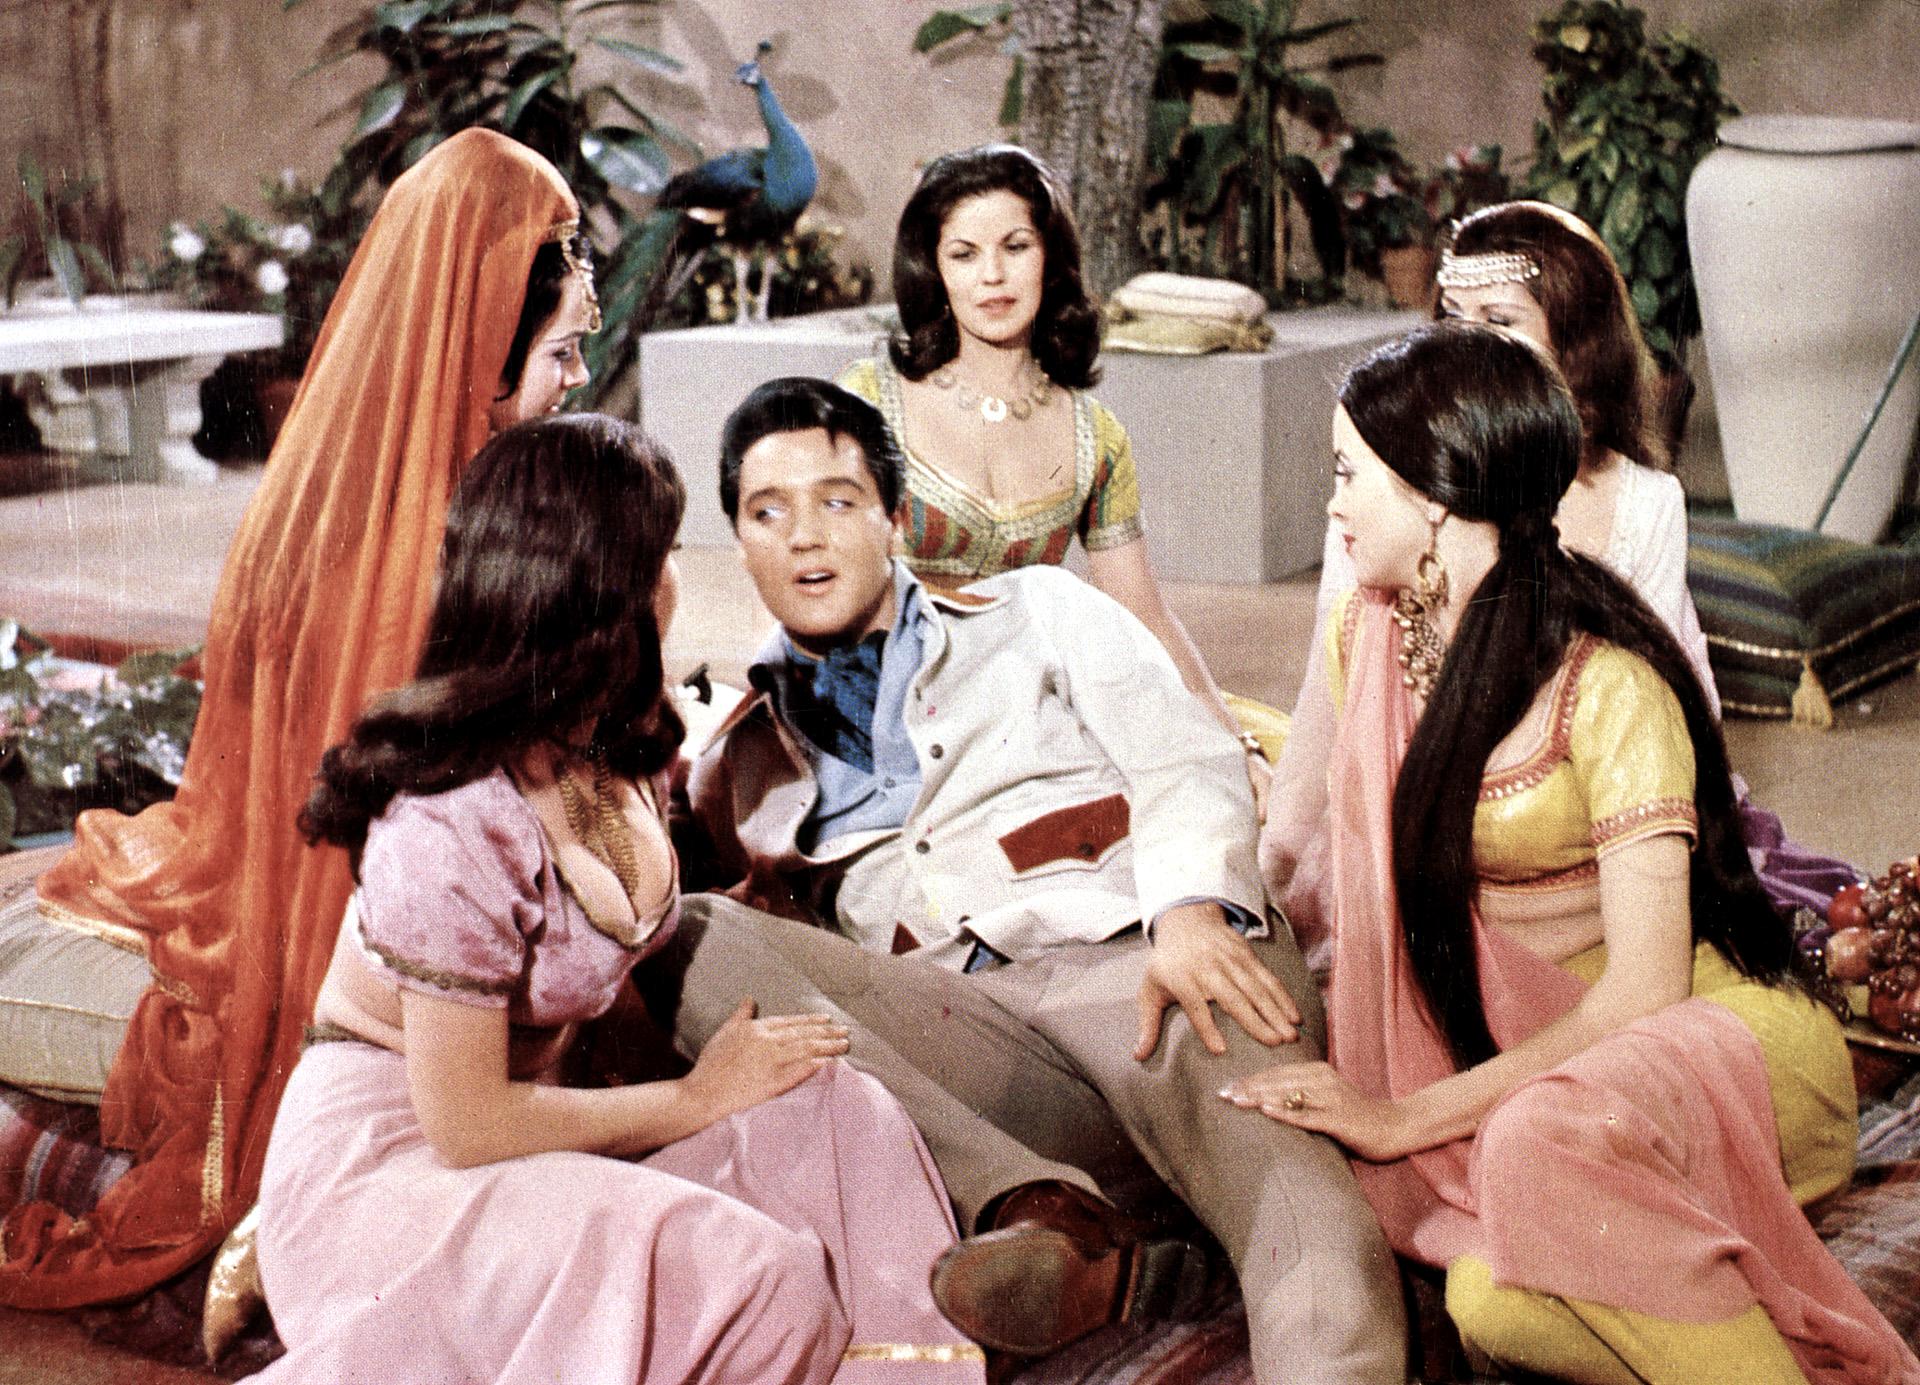 Elvis Presley surrounded by women in Harum Scarum